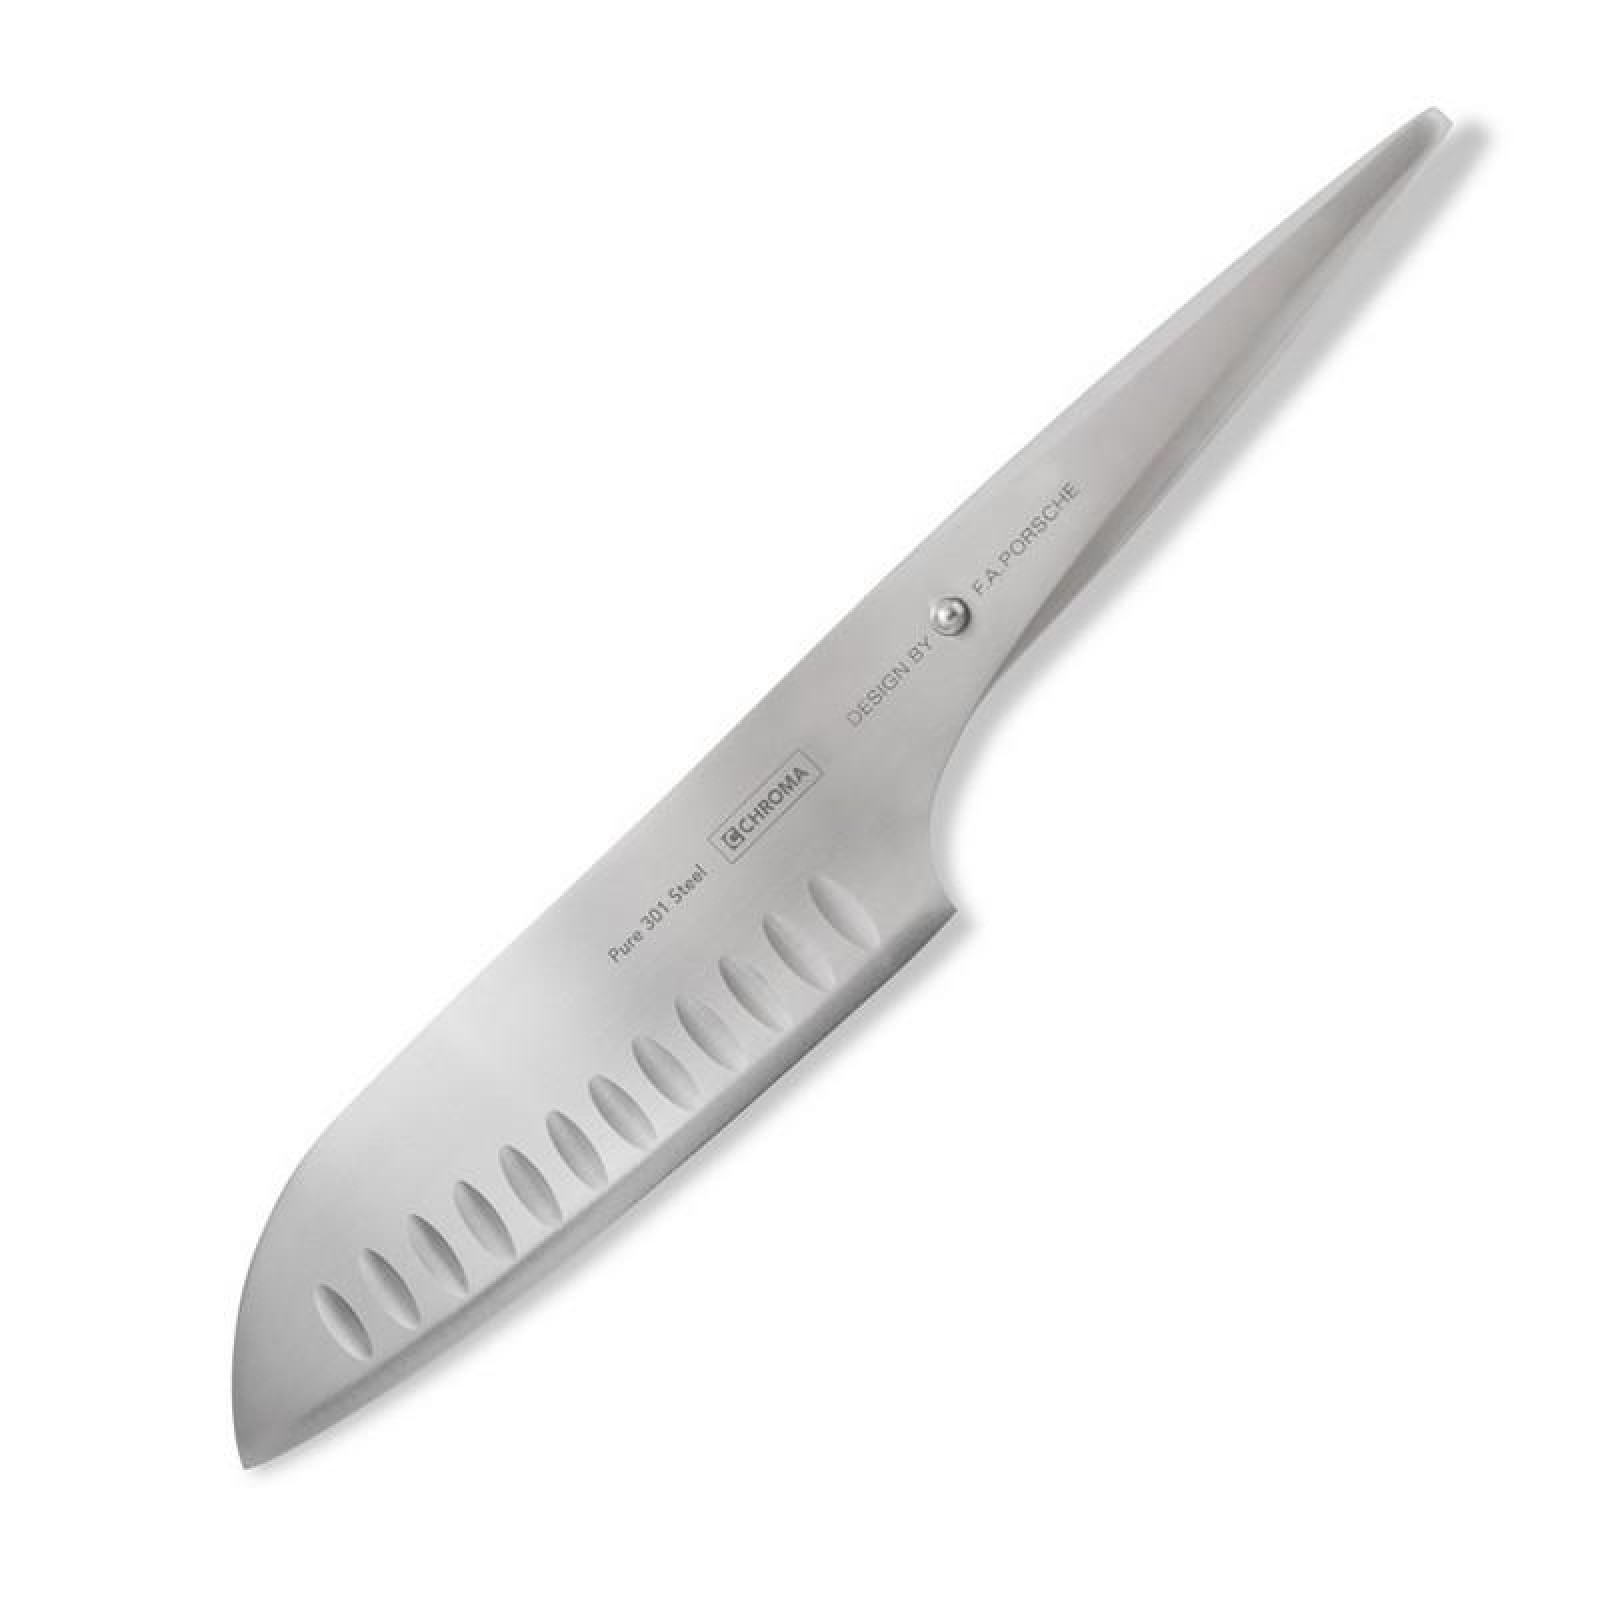 Fluted Blade Santoku Knife 17.8 cm Type 301 P21 by F.A. Porsche - Chroma 